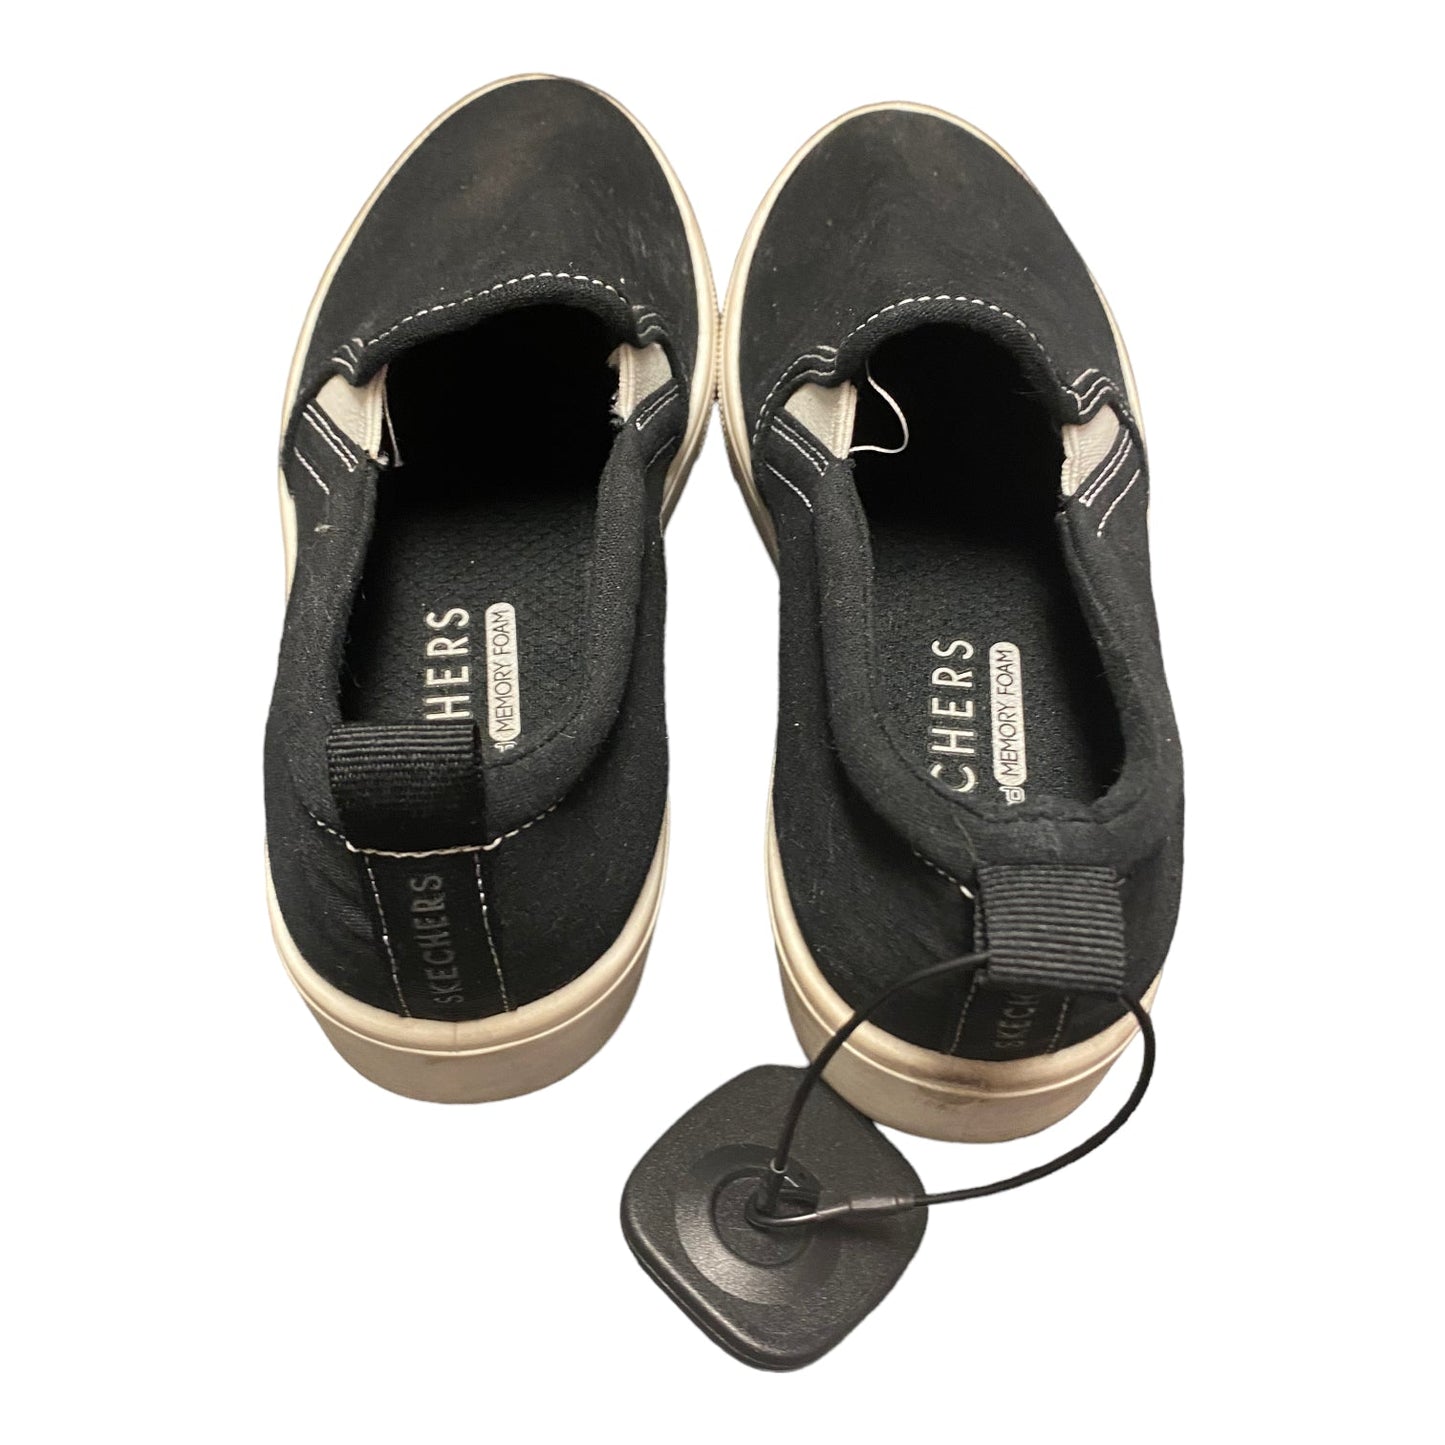 Black & White Shoes Flats Skechers, Size 6.5